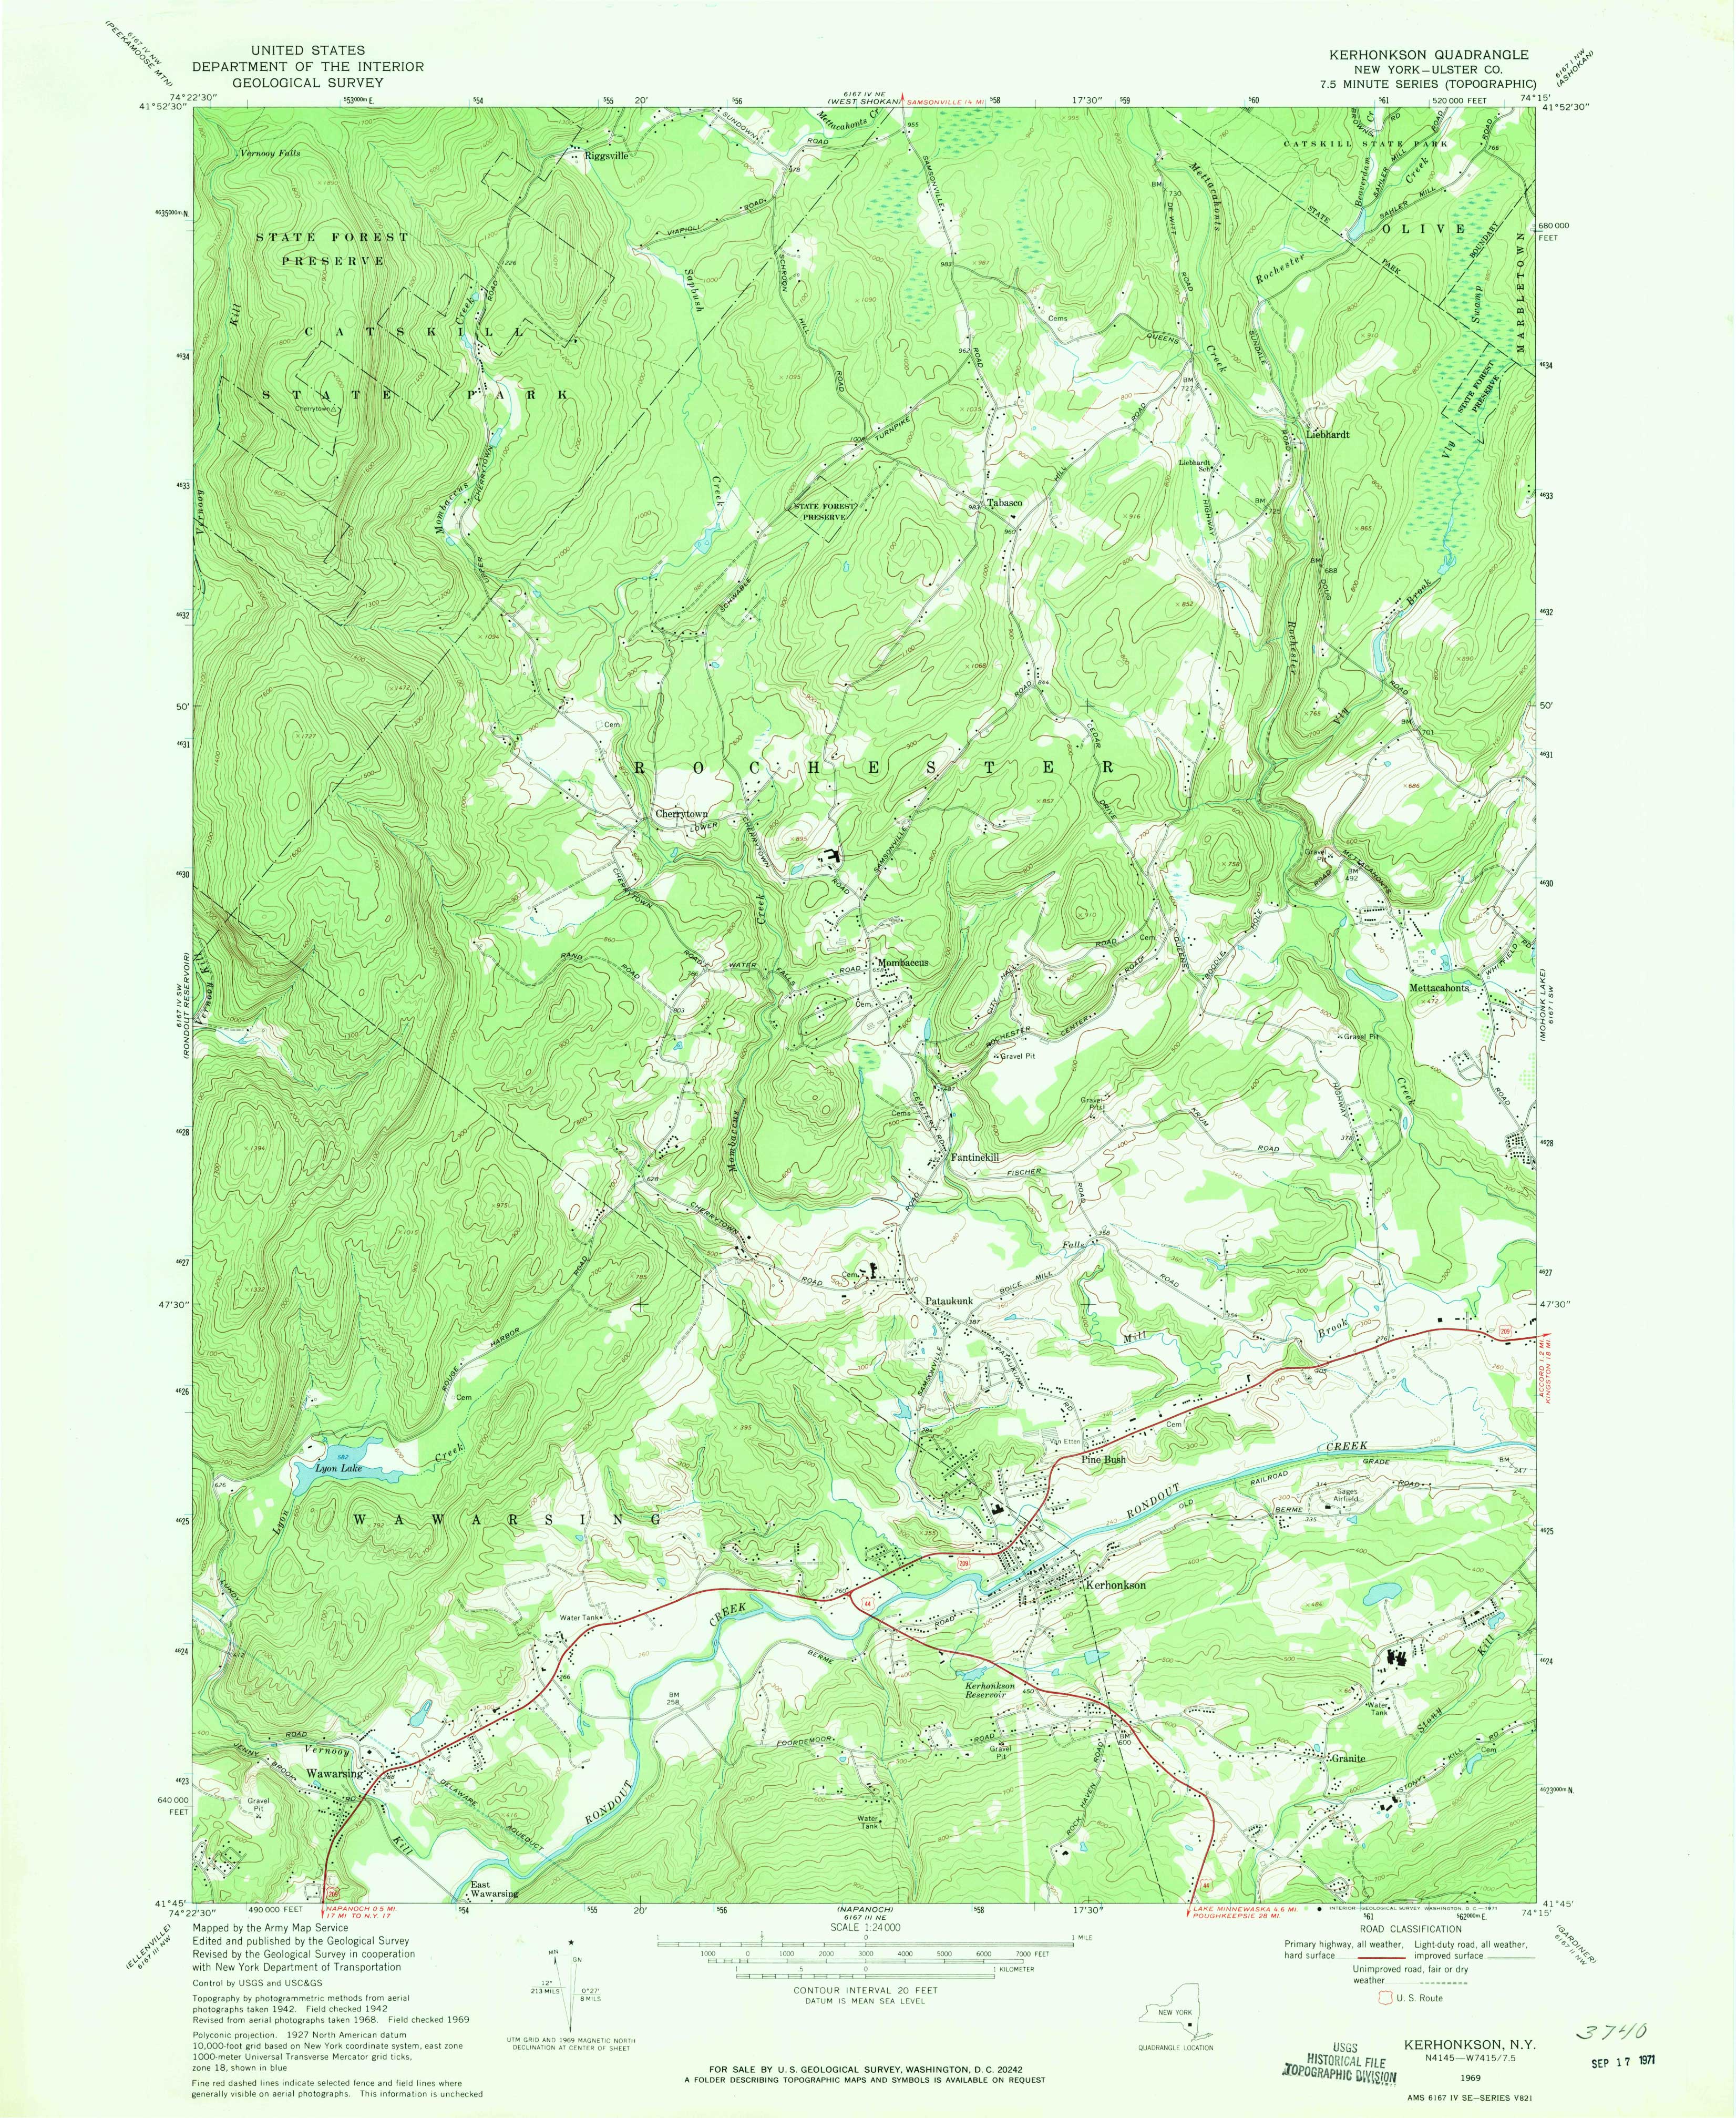 1997 USGS topographical map of Kerhonkson